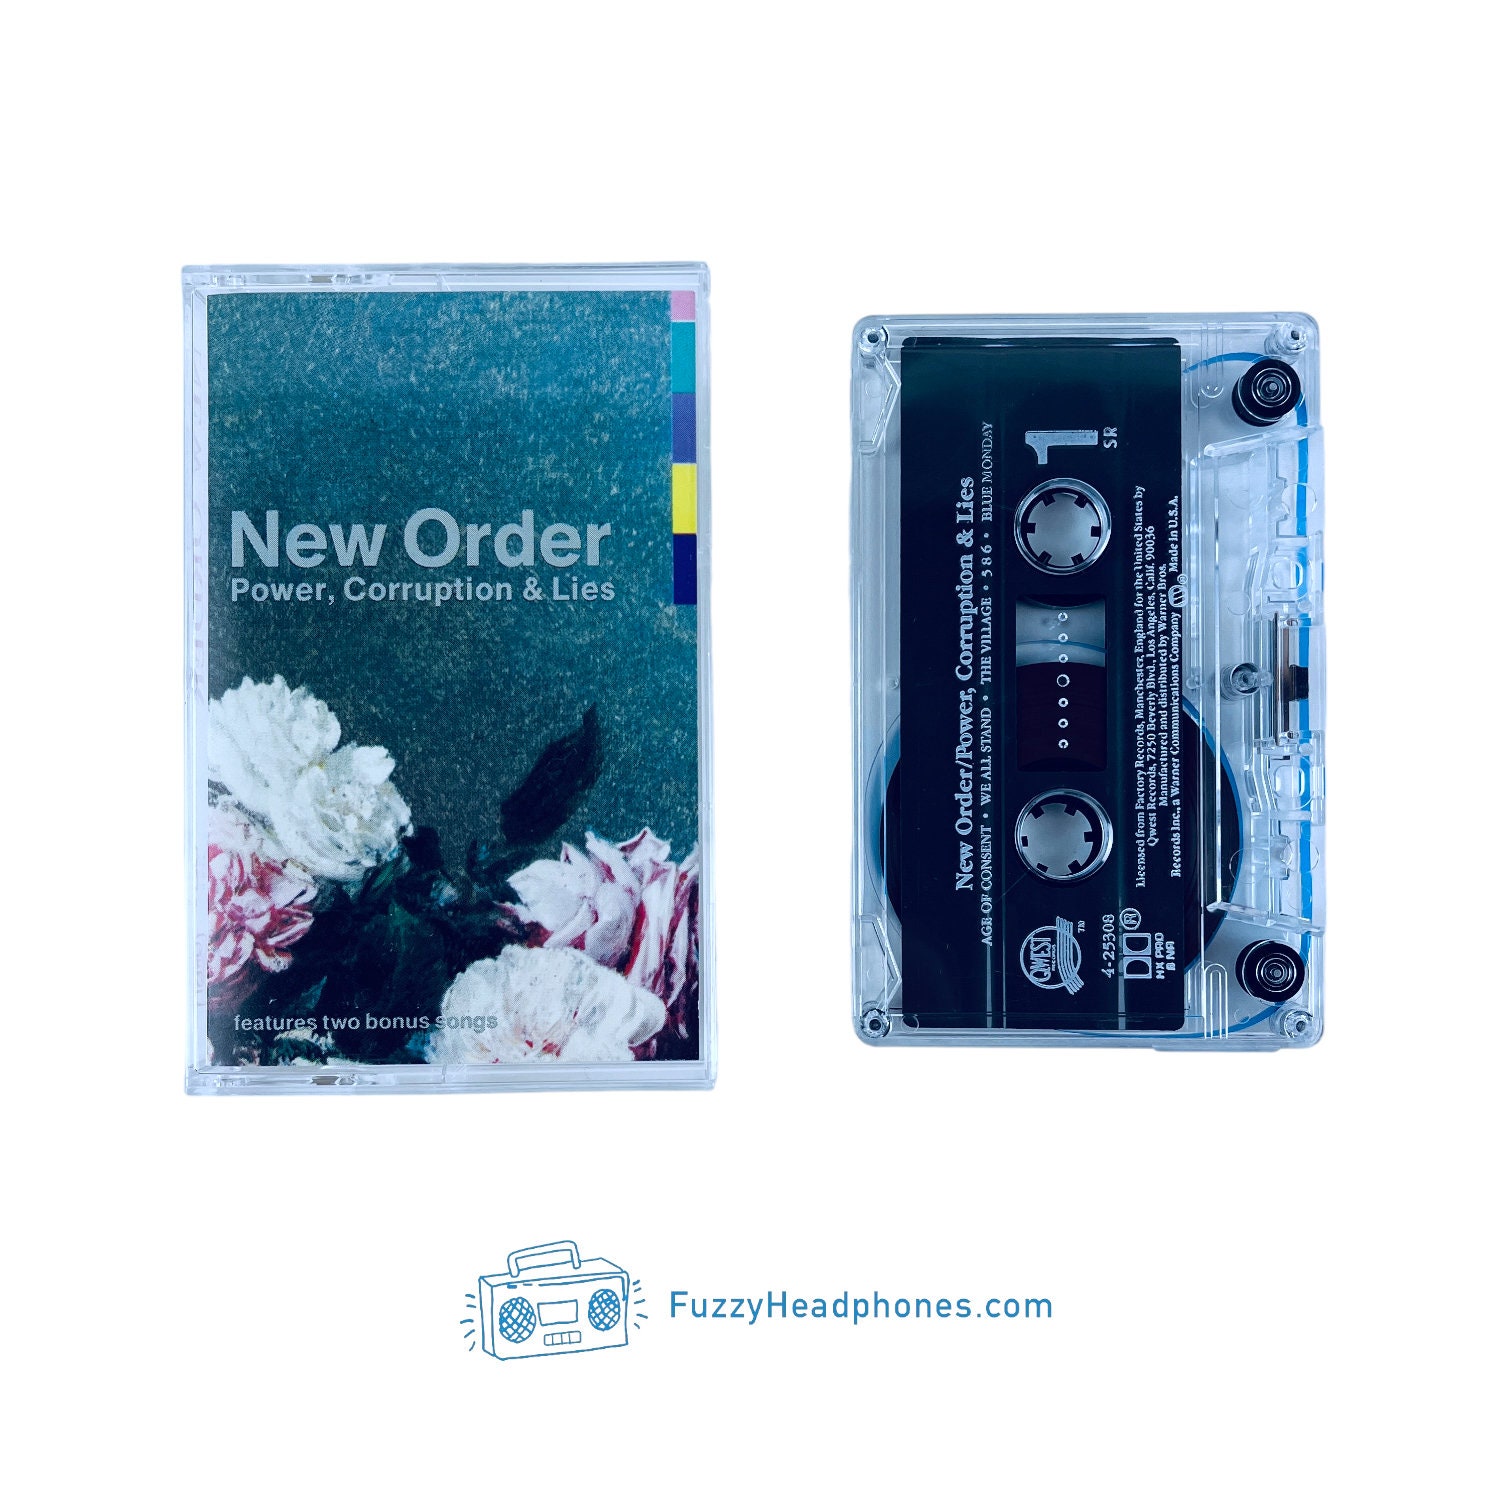 New Order Power, Corruption & Lies 輸入盤 - 洋楽